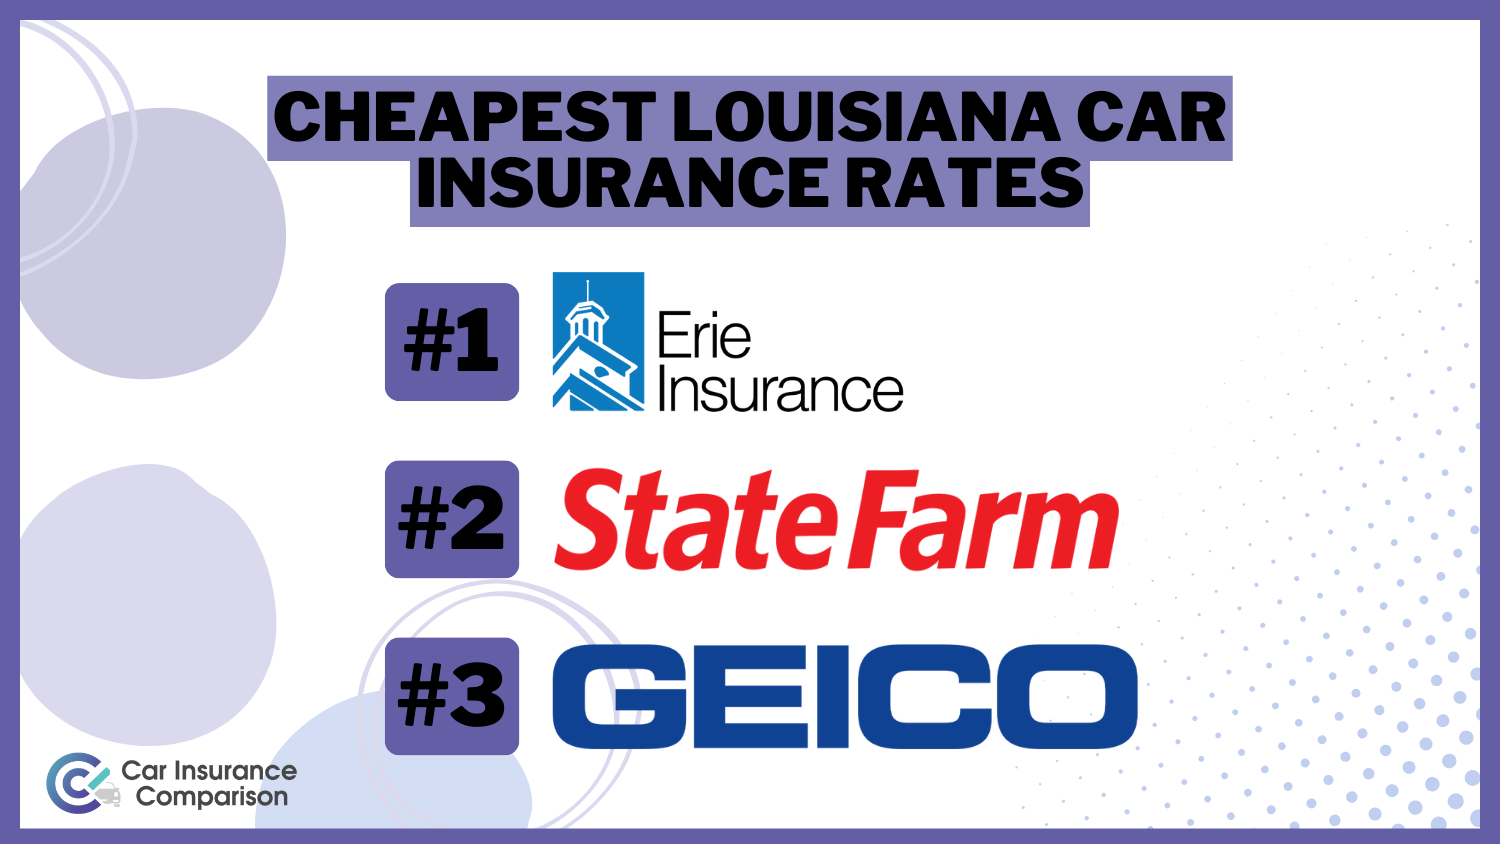 Cheapest Louisiana Car Insurance Rates: Erie, State Farm, and Geico.